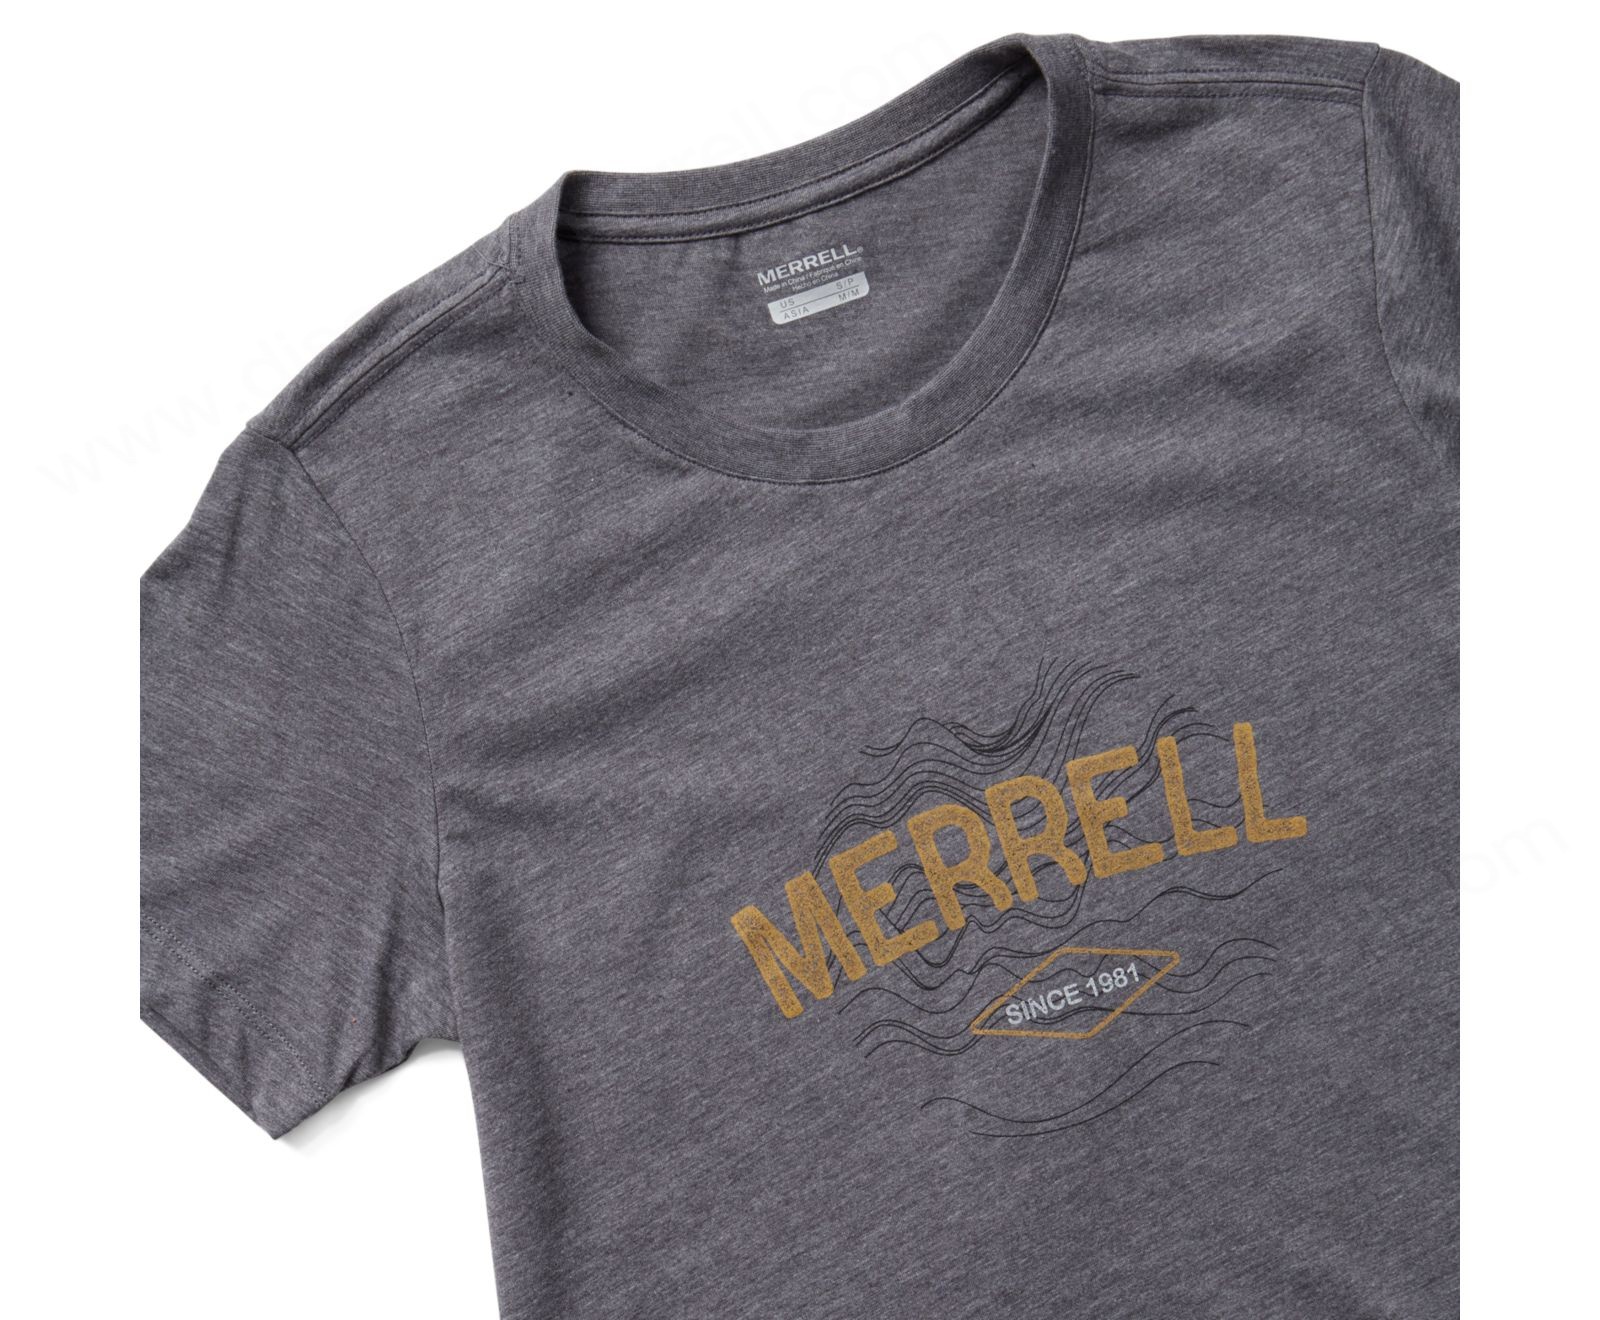 Merrell - Women's Topo Short Sleeve Tee - Merrell - Women's Topo Short Sleeve Tee